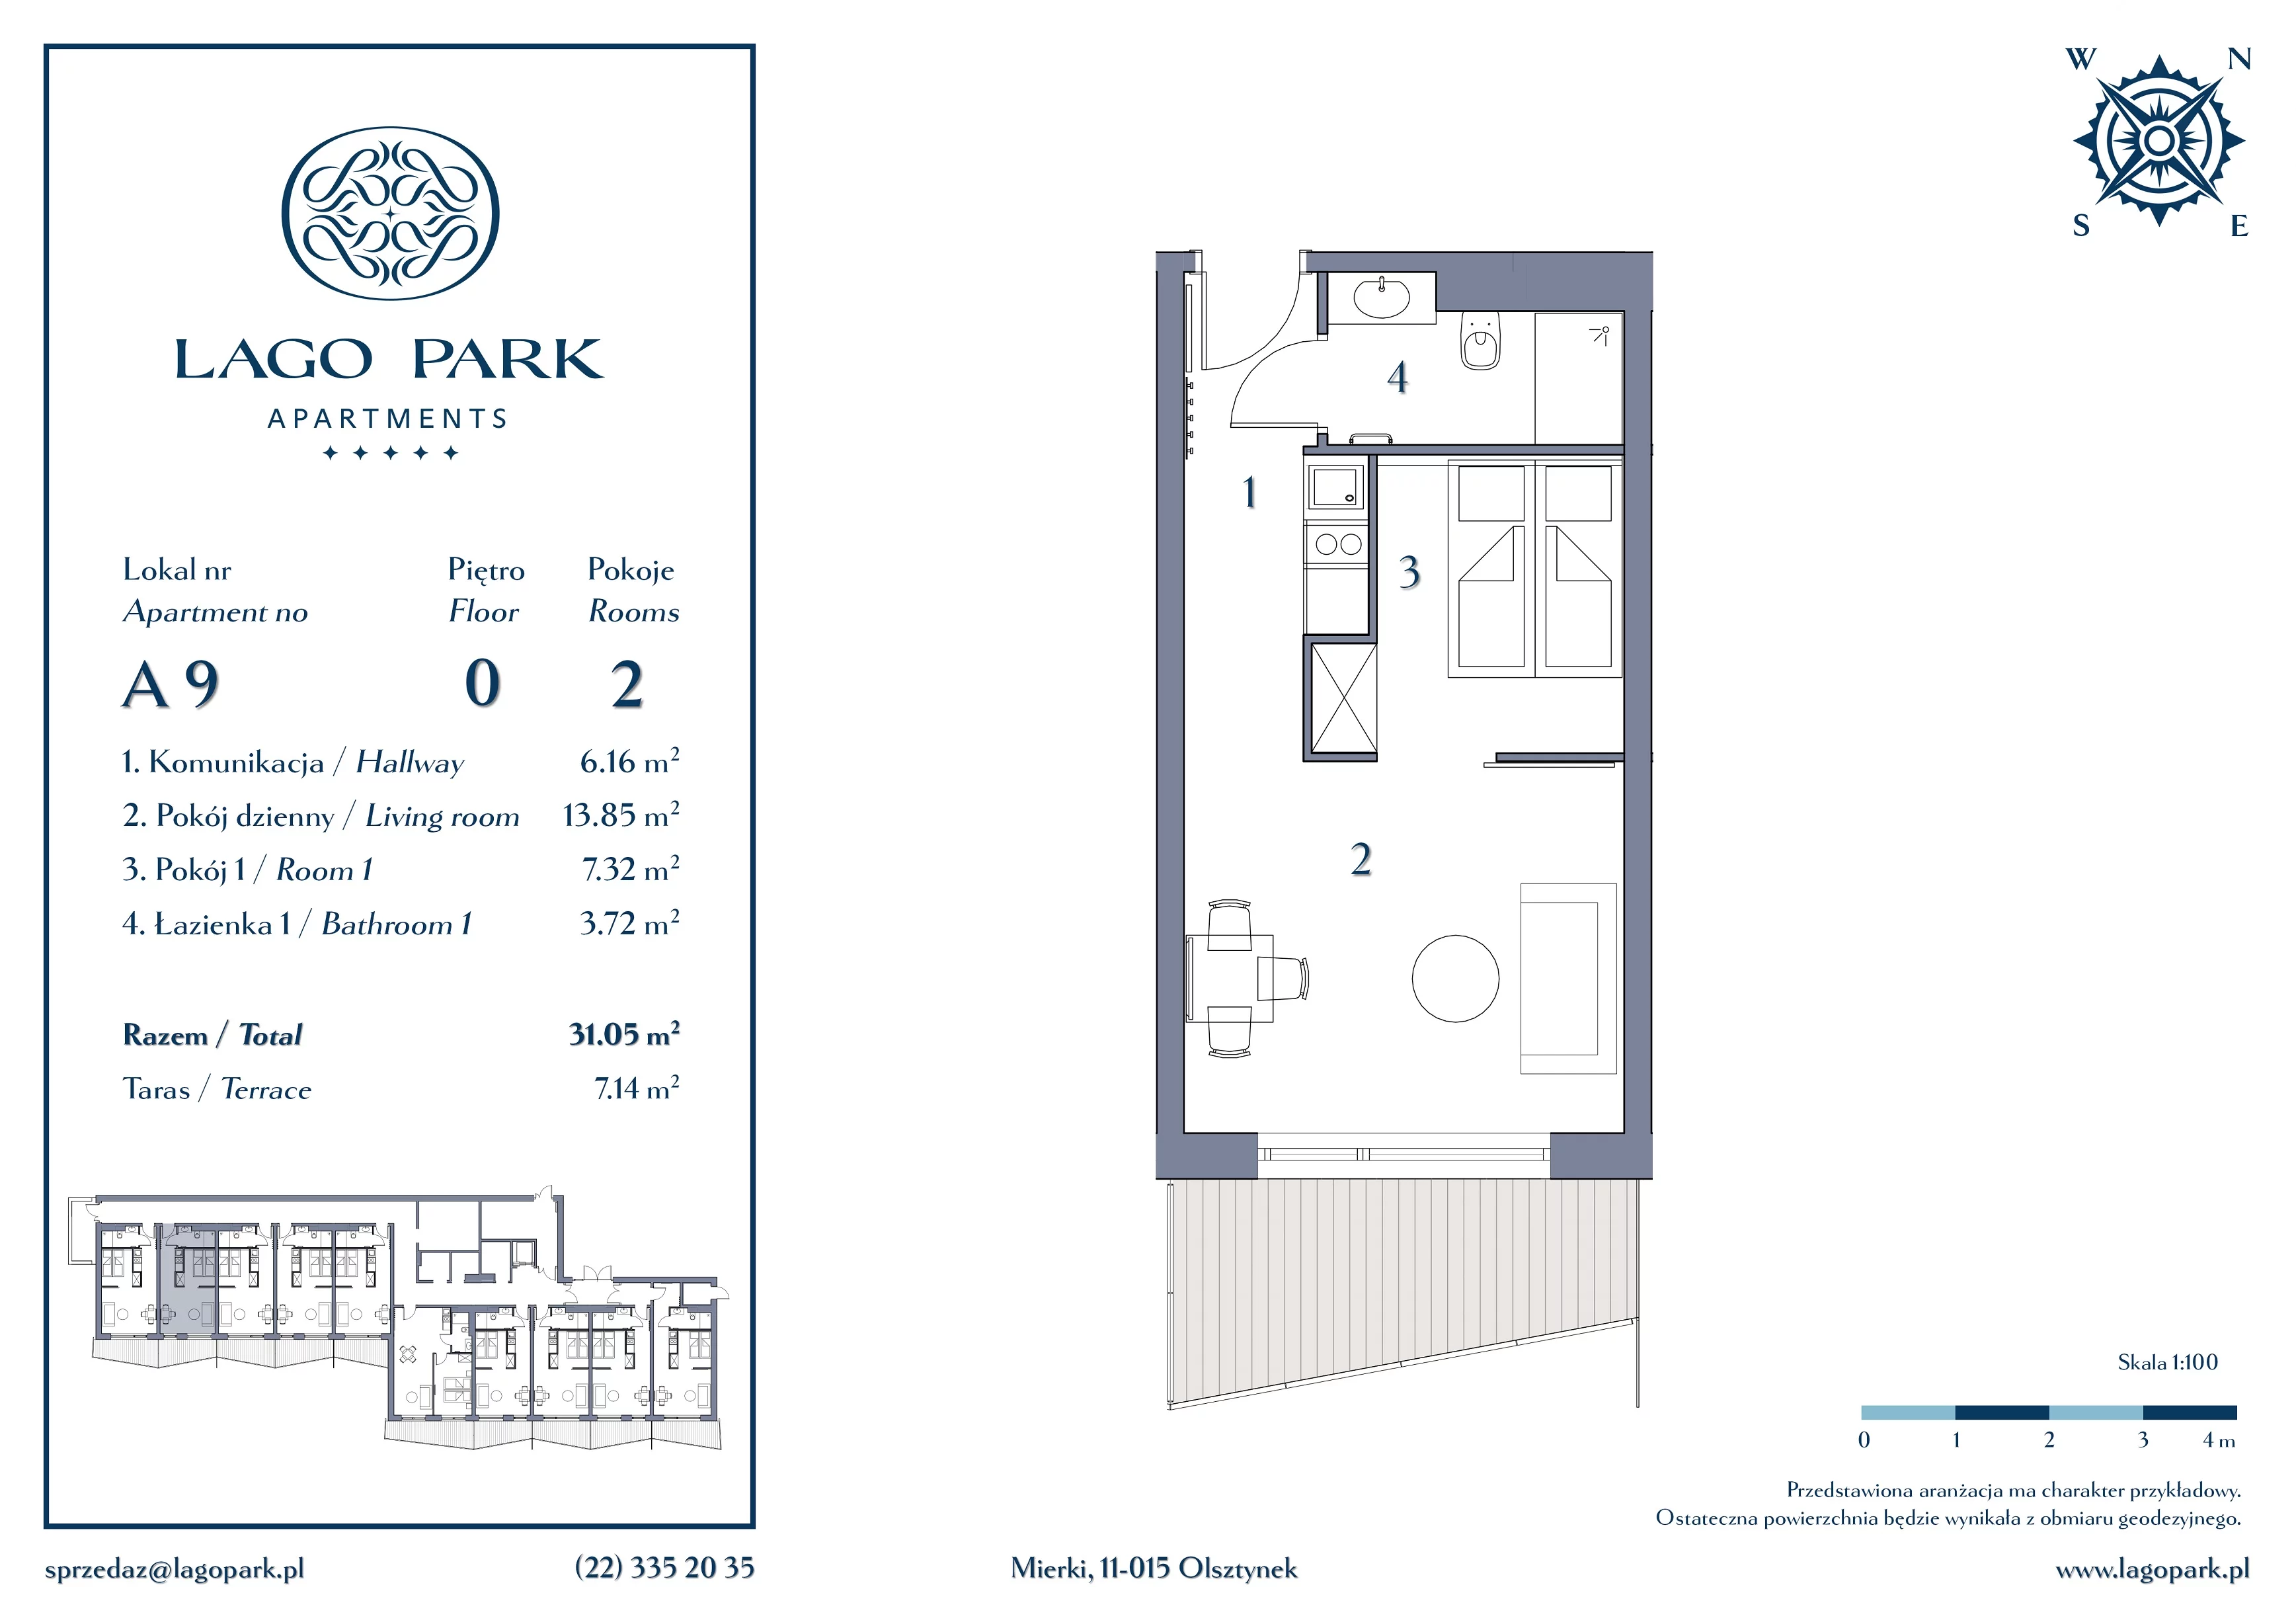 Apartament inwestycyjny 31,05 m², parter, oferta nr A9, Lago Park Apartments by Aries, Mierki, Kołatek 2